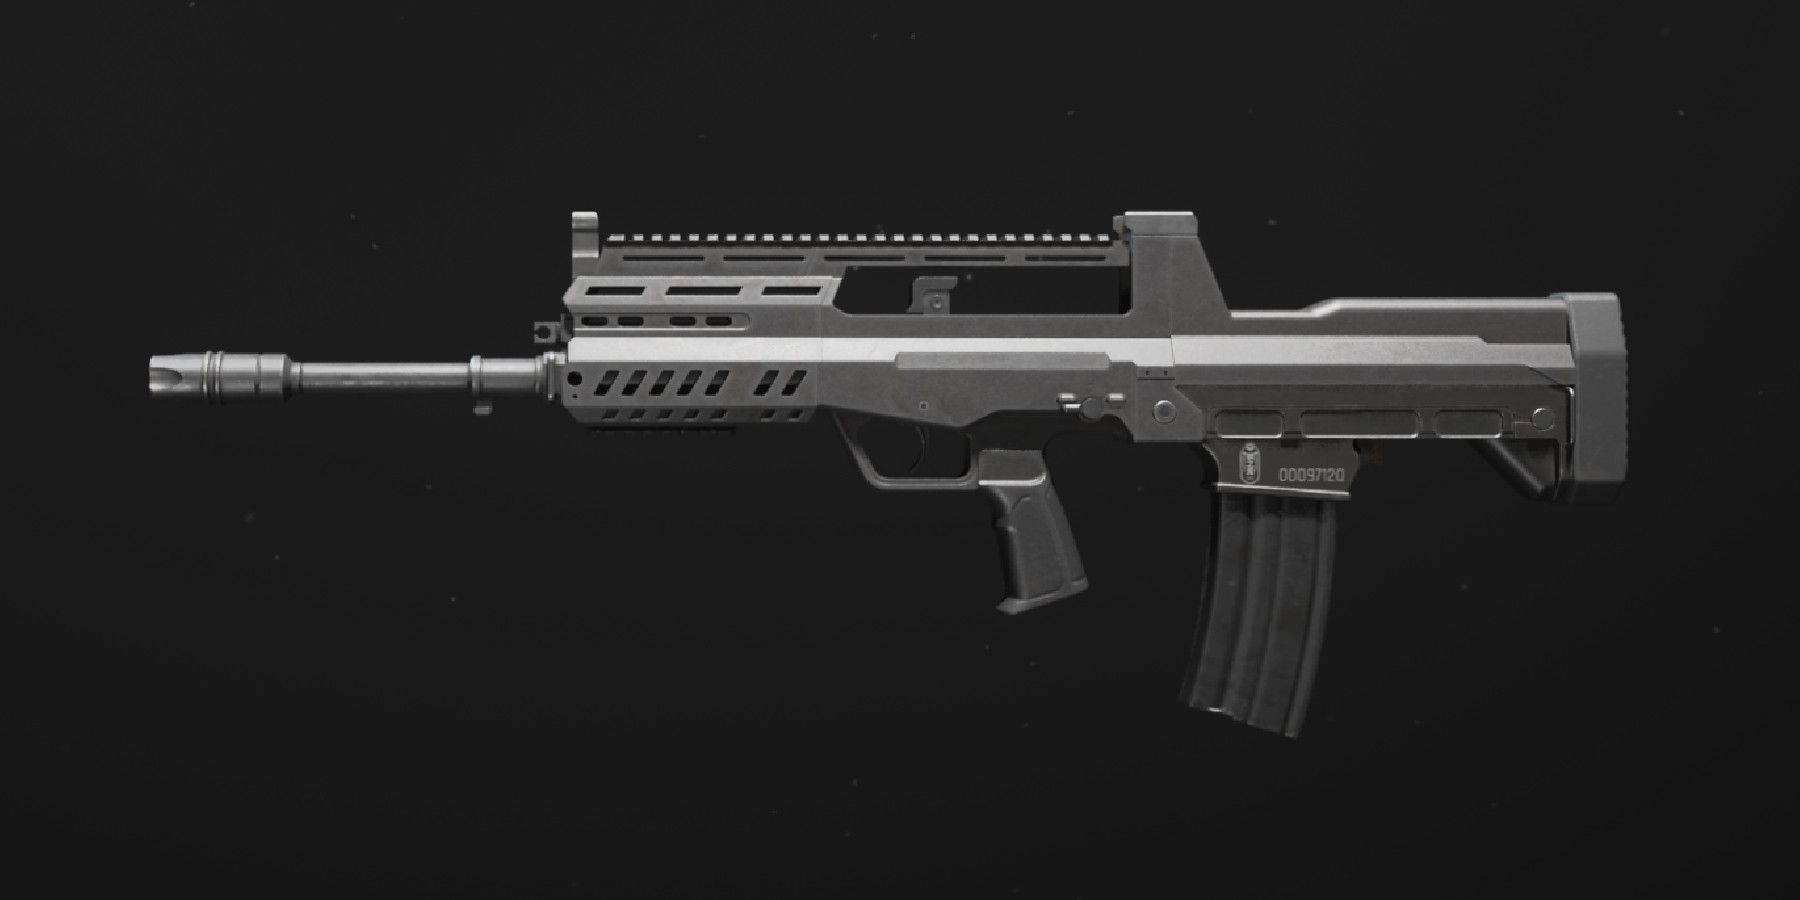 mw3 - weapon camos - dg58